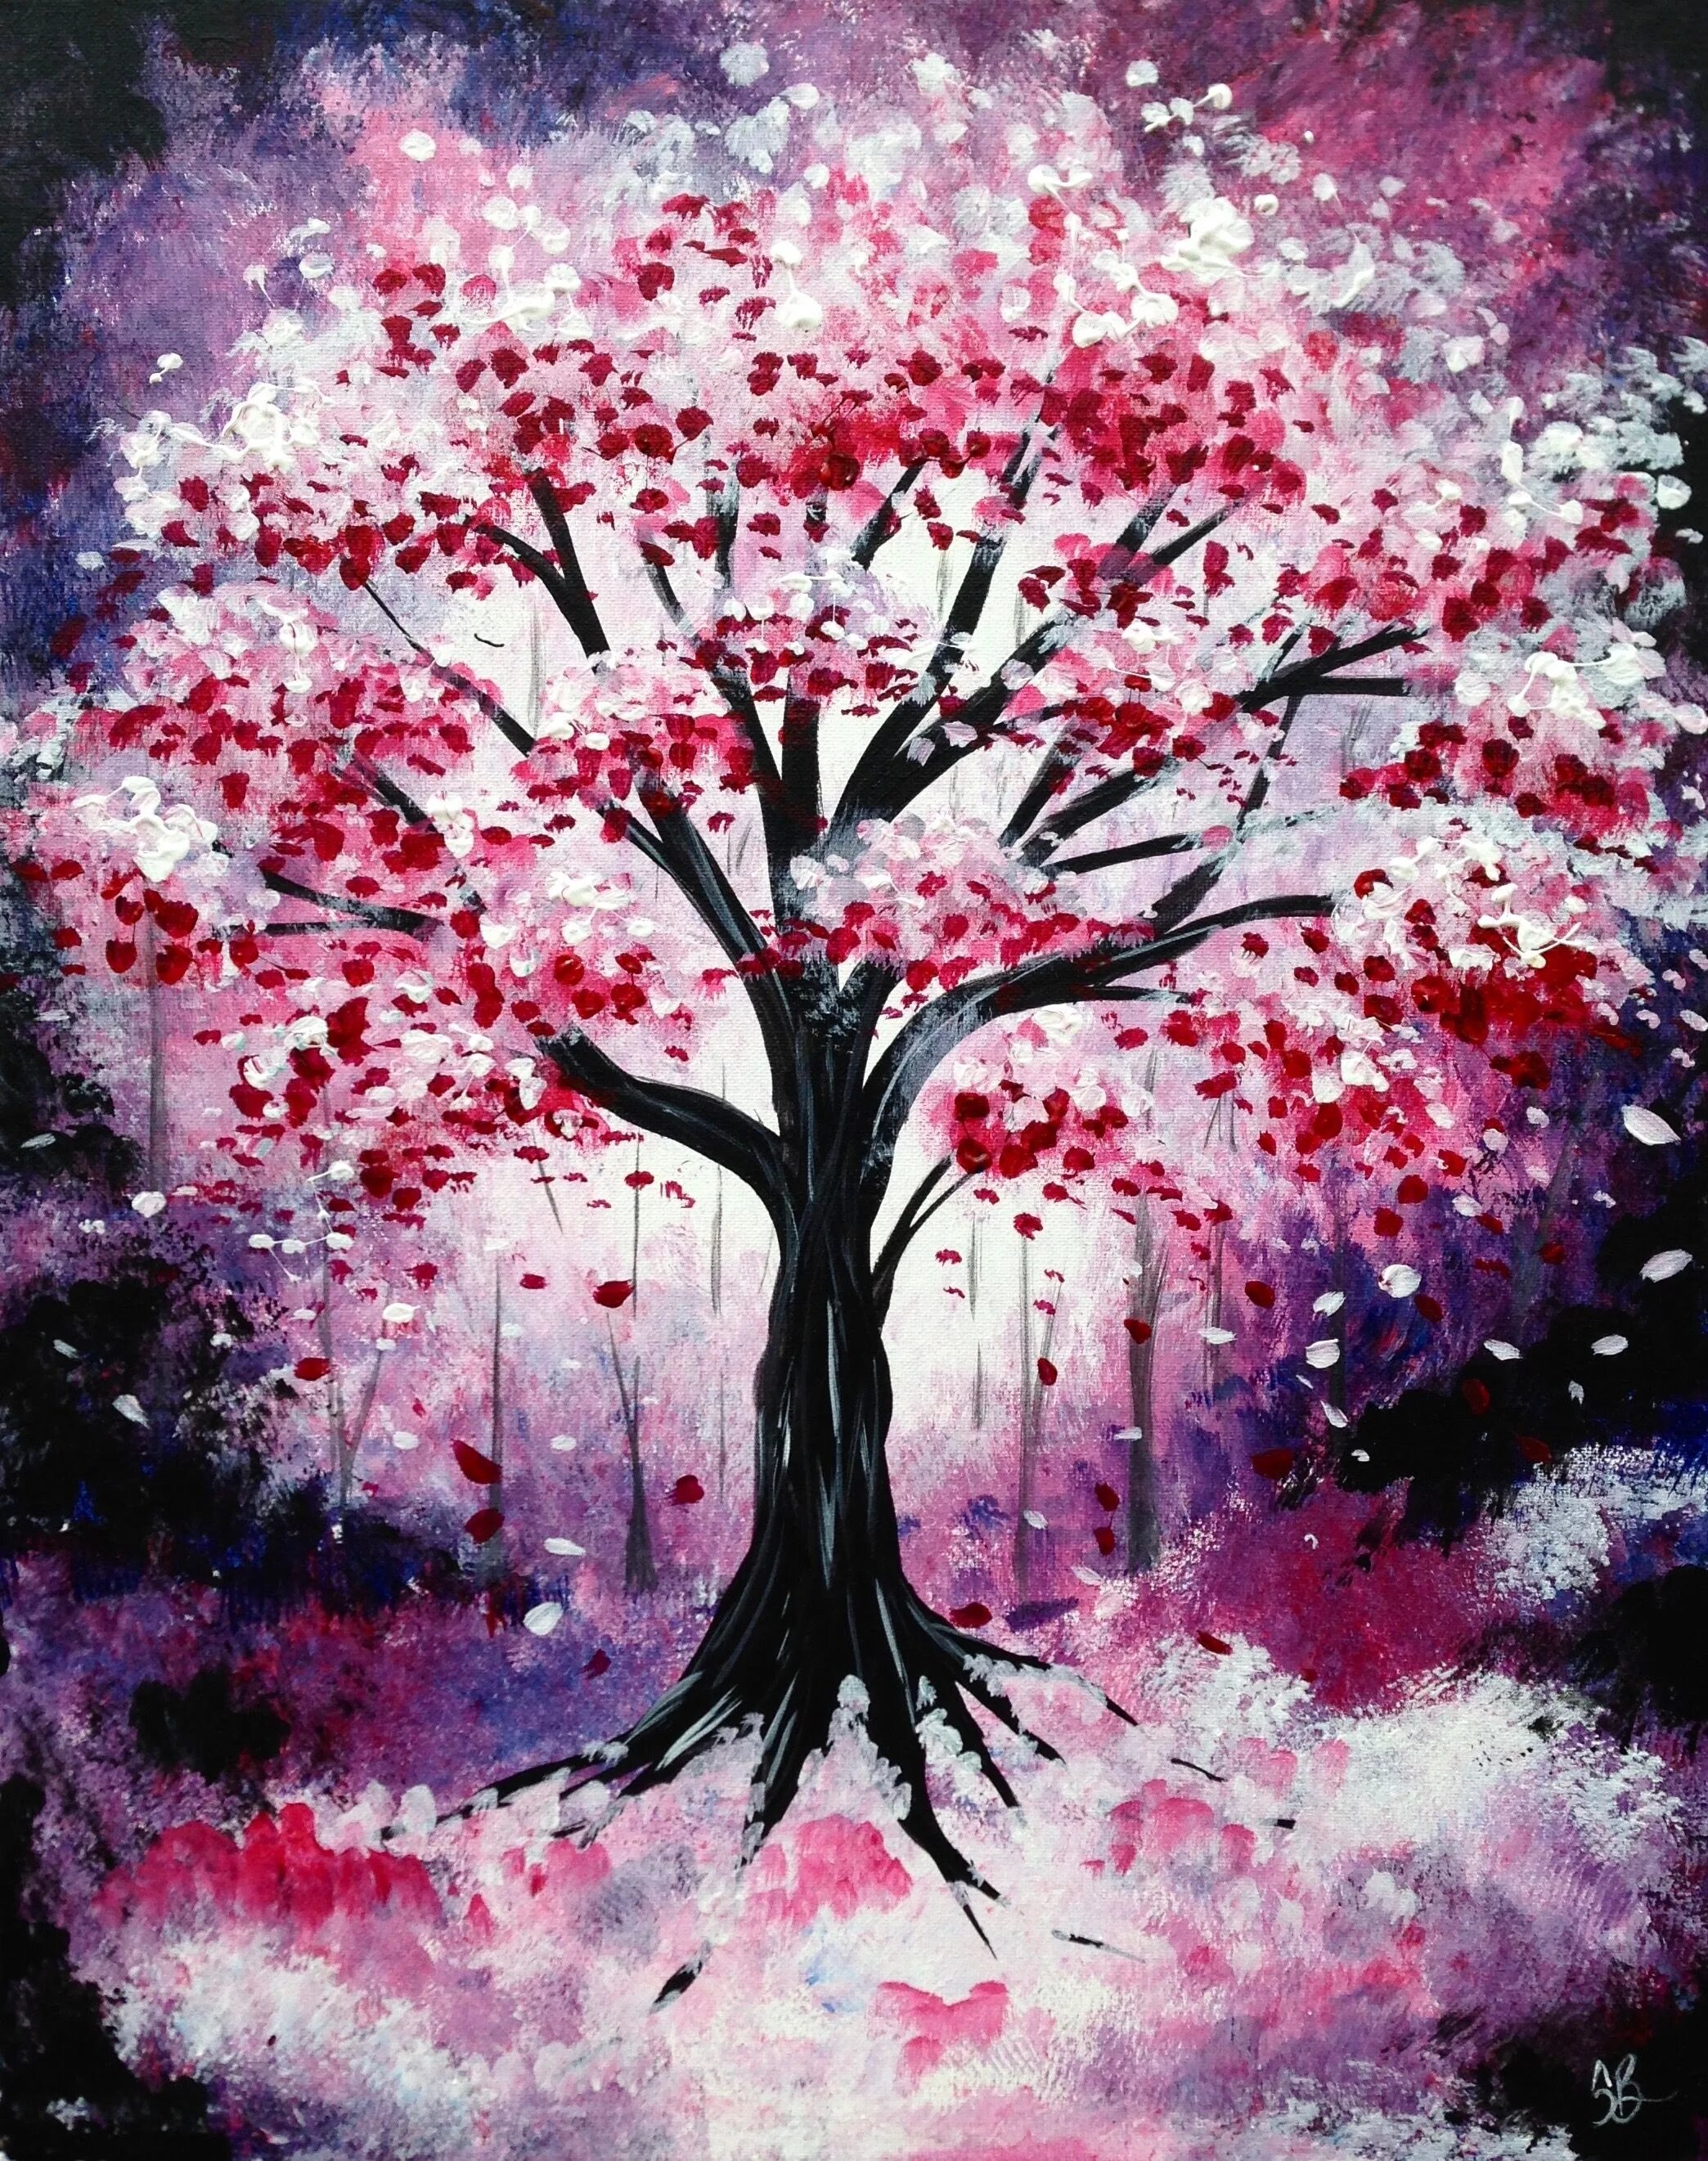 Сакура красками. Дерево Сакуры акрилом. Рисование дерева Сакуры. Сакура дерево нарисованное. Красивое цветущее дерево красками.